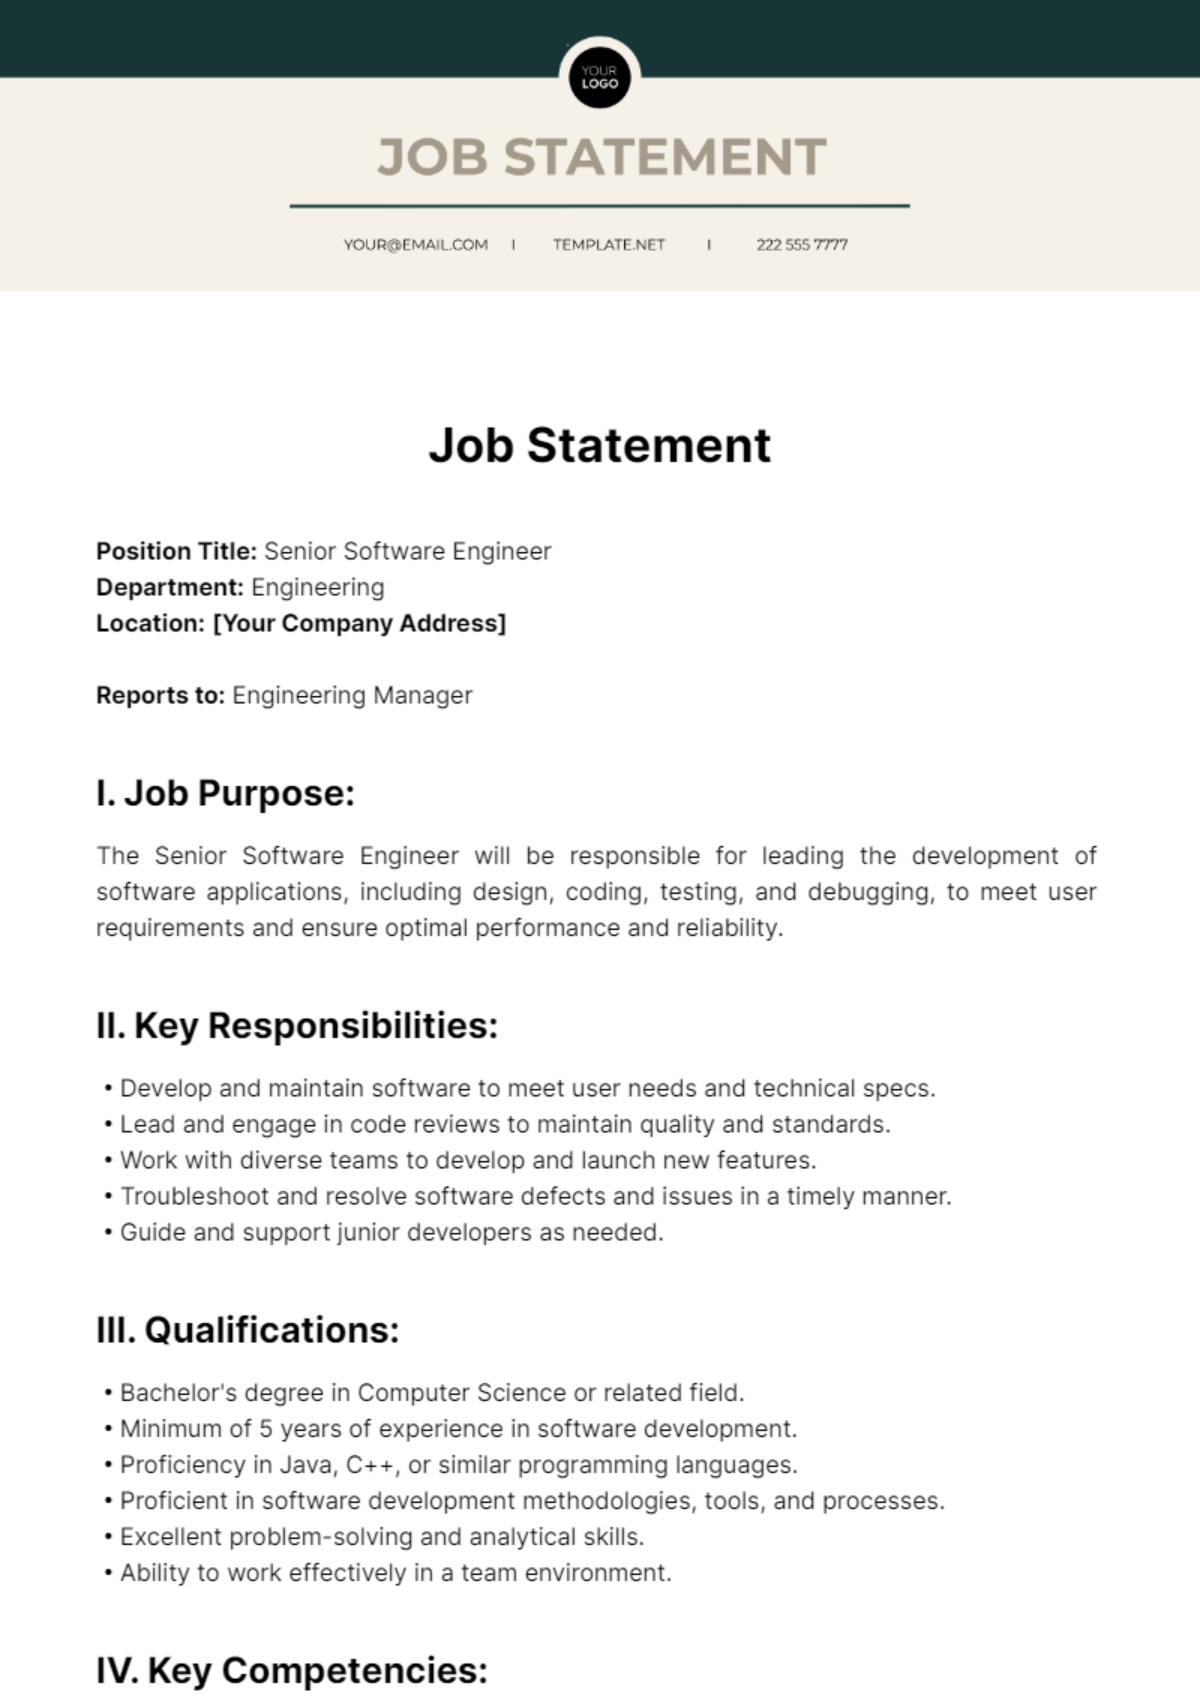 Job Statement Template